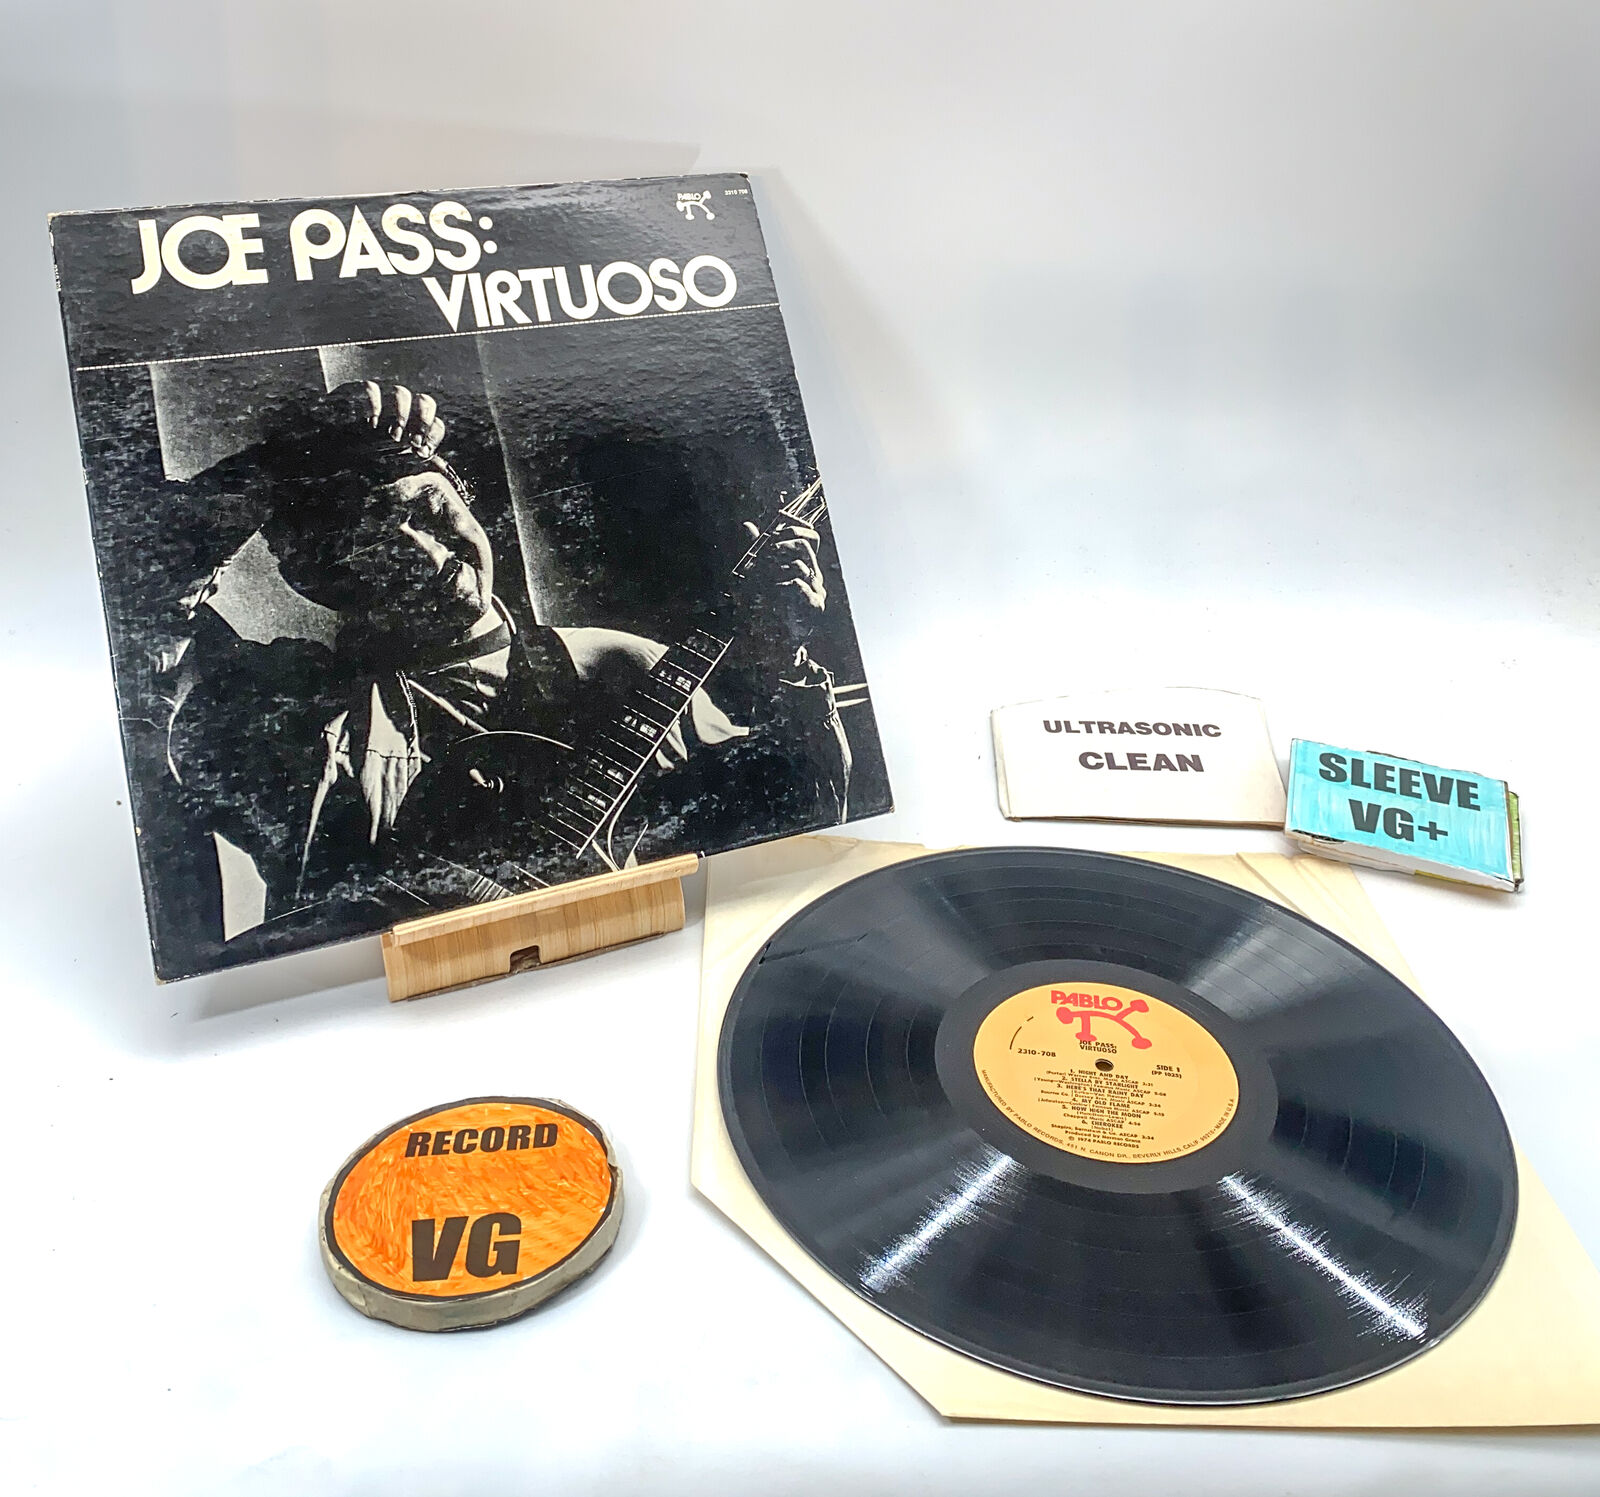 Joe Pass - Virtuoso 1974 VG/VG+ Ultrasonic Clean Vintage Vinyl